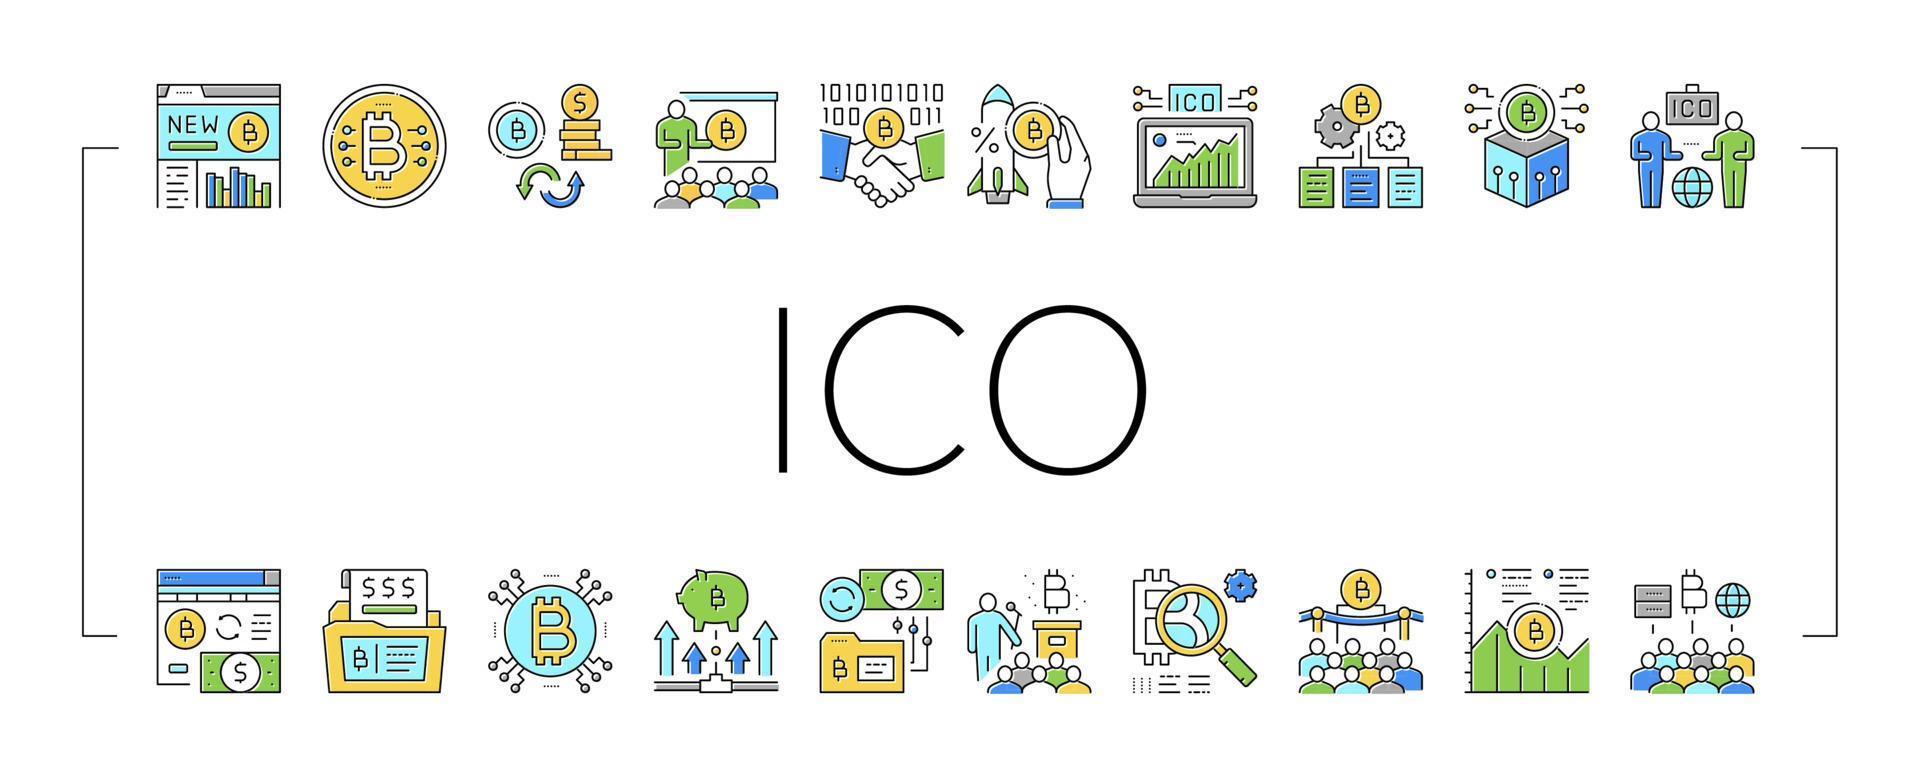 ico initiala mynt erbjudande samling ikoner set vektor